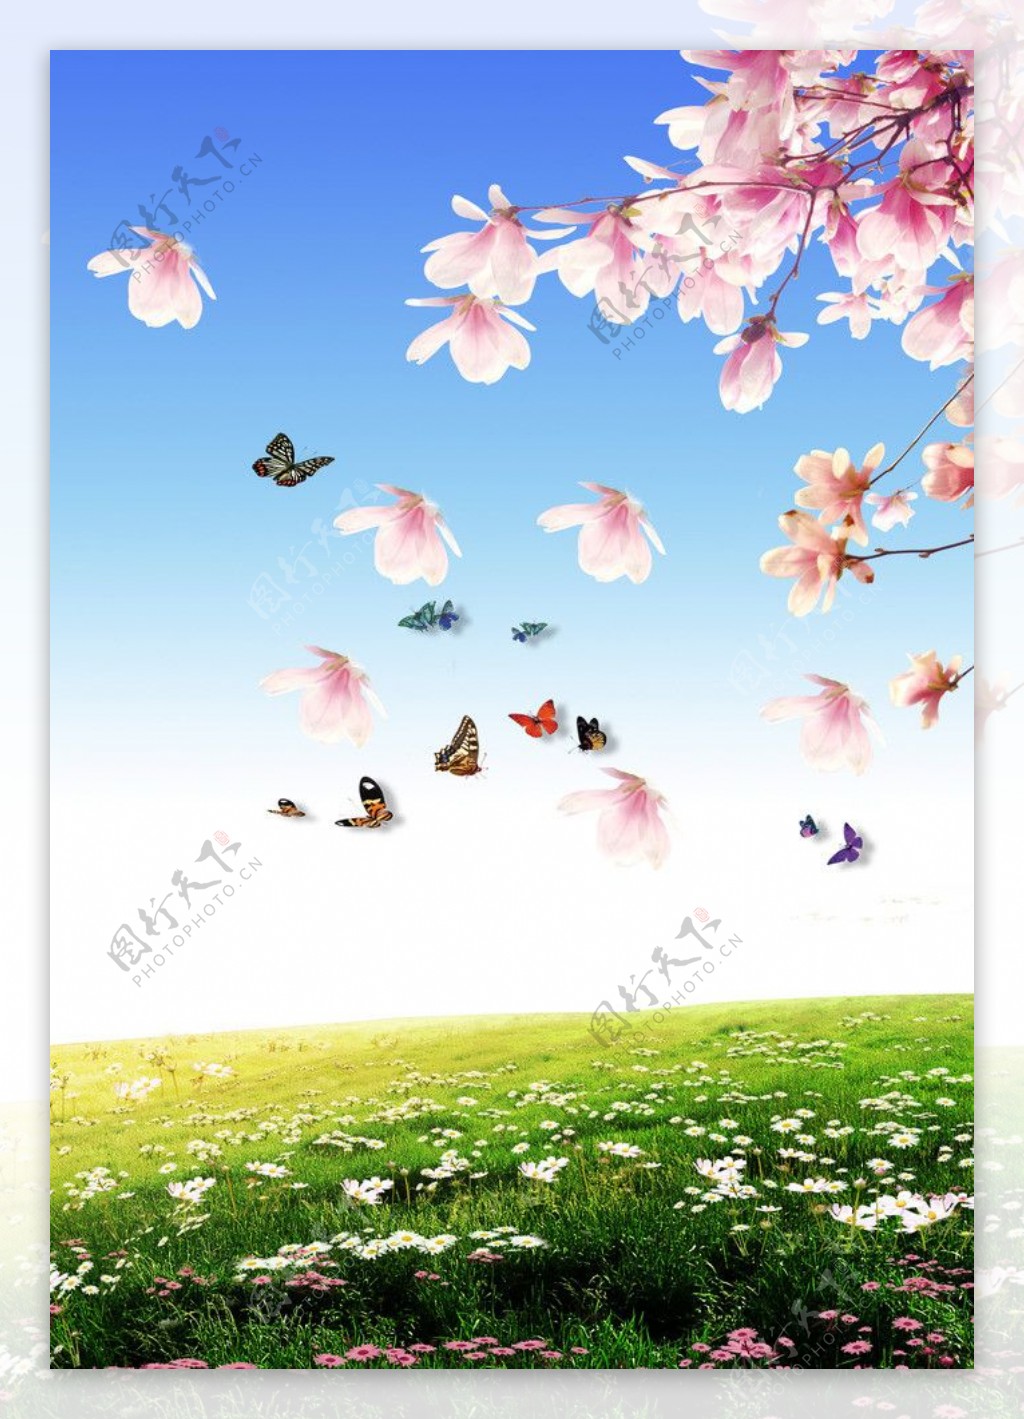 Wallpaper : 1920x1200 px, butterflies, depth, field, flowers, insects ...